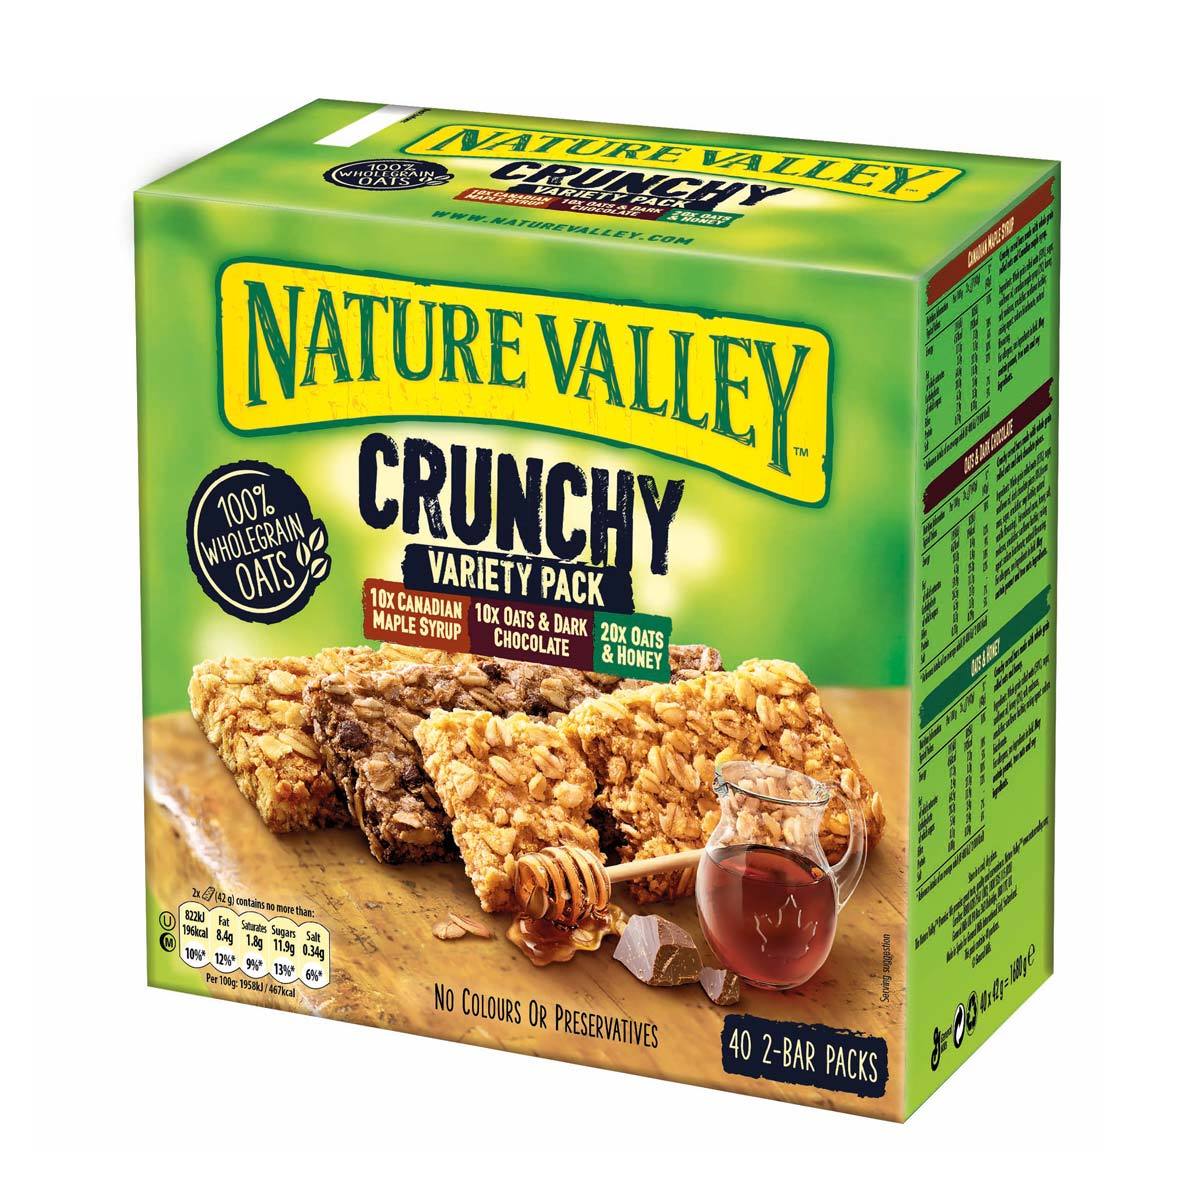 Green Variety box of Crunchy Nature Valley Bars